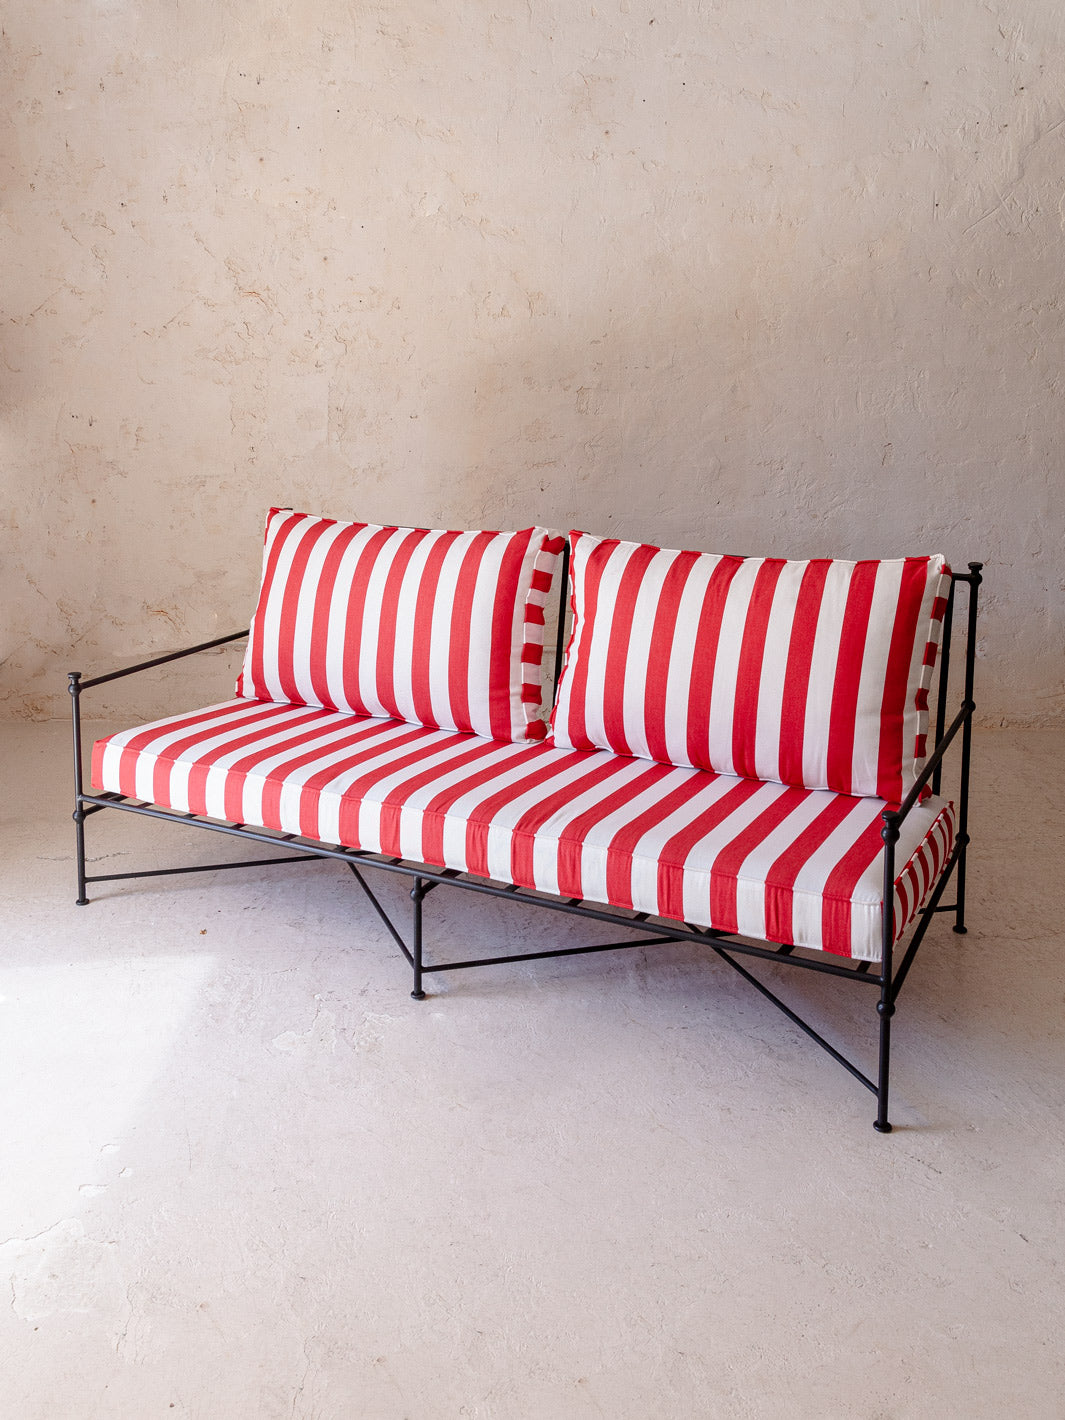 Canapé in fer forgé striped rouge et blanc